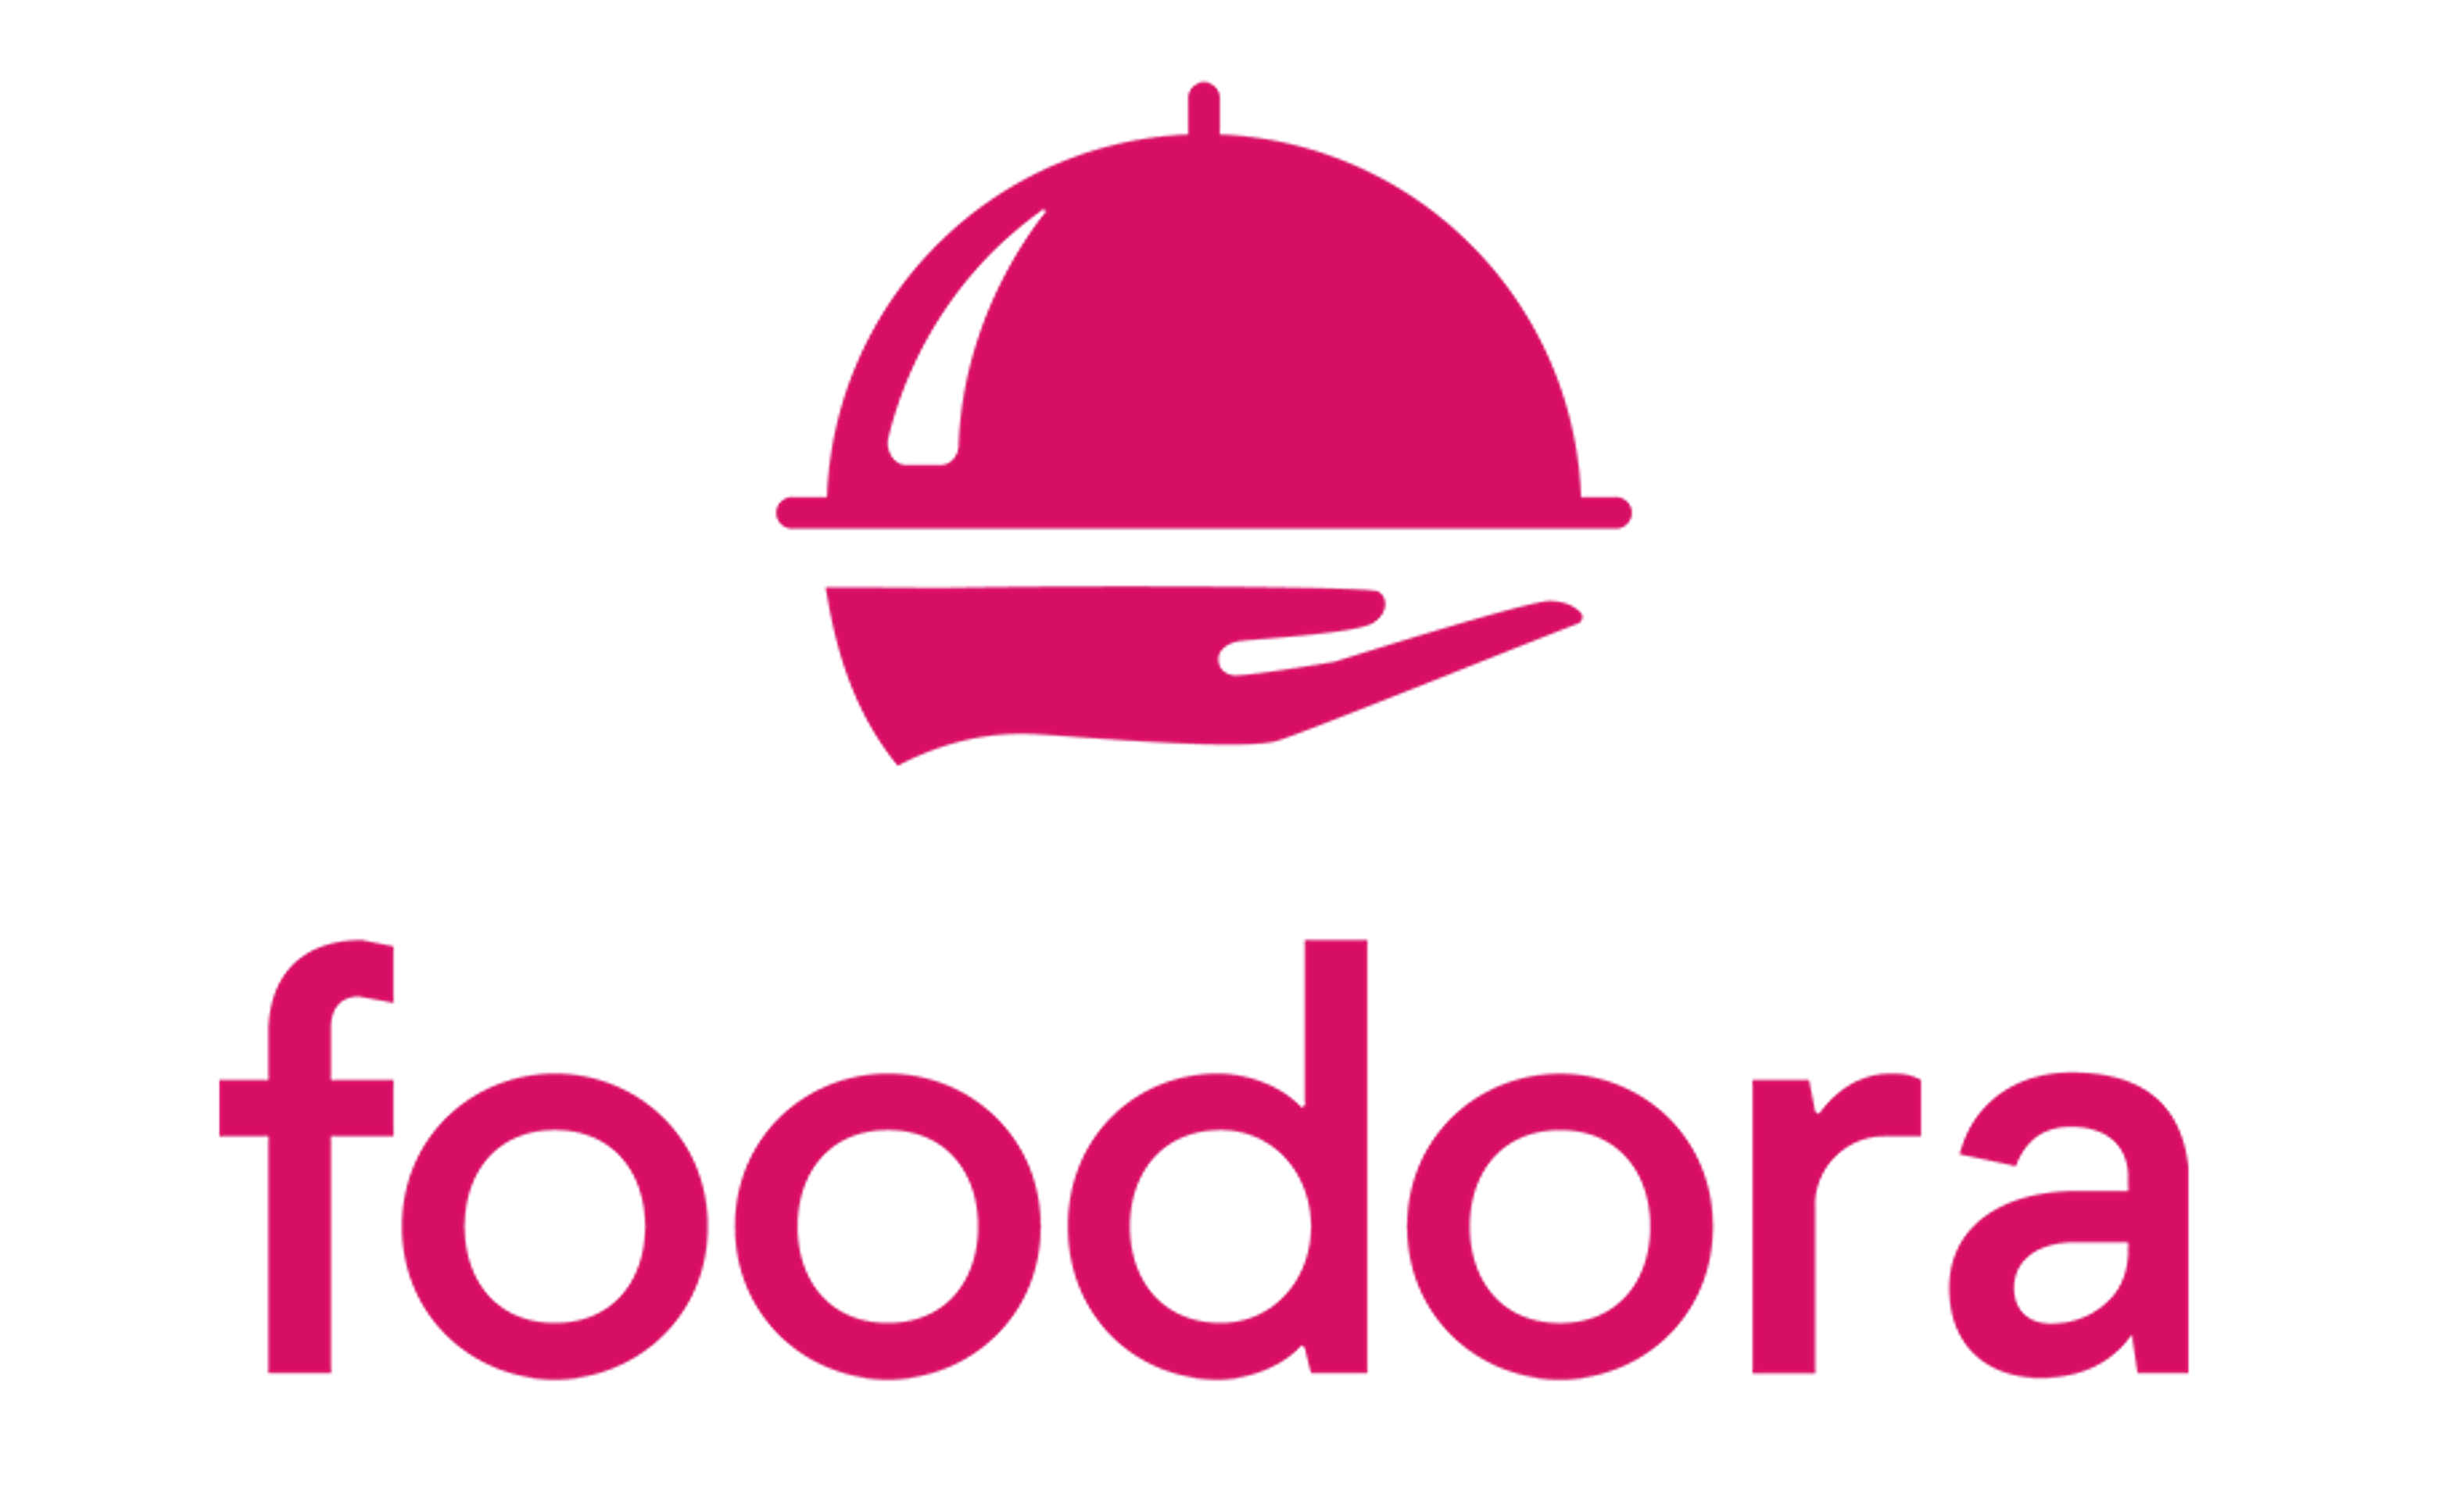 foodora-1